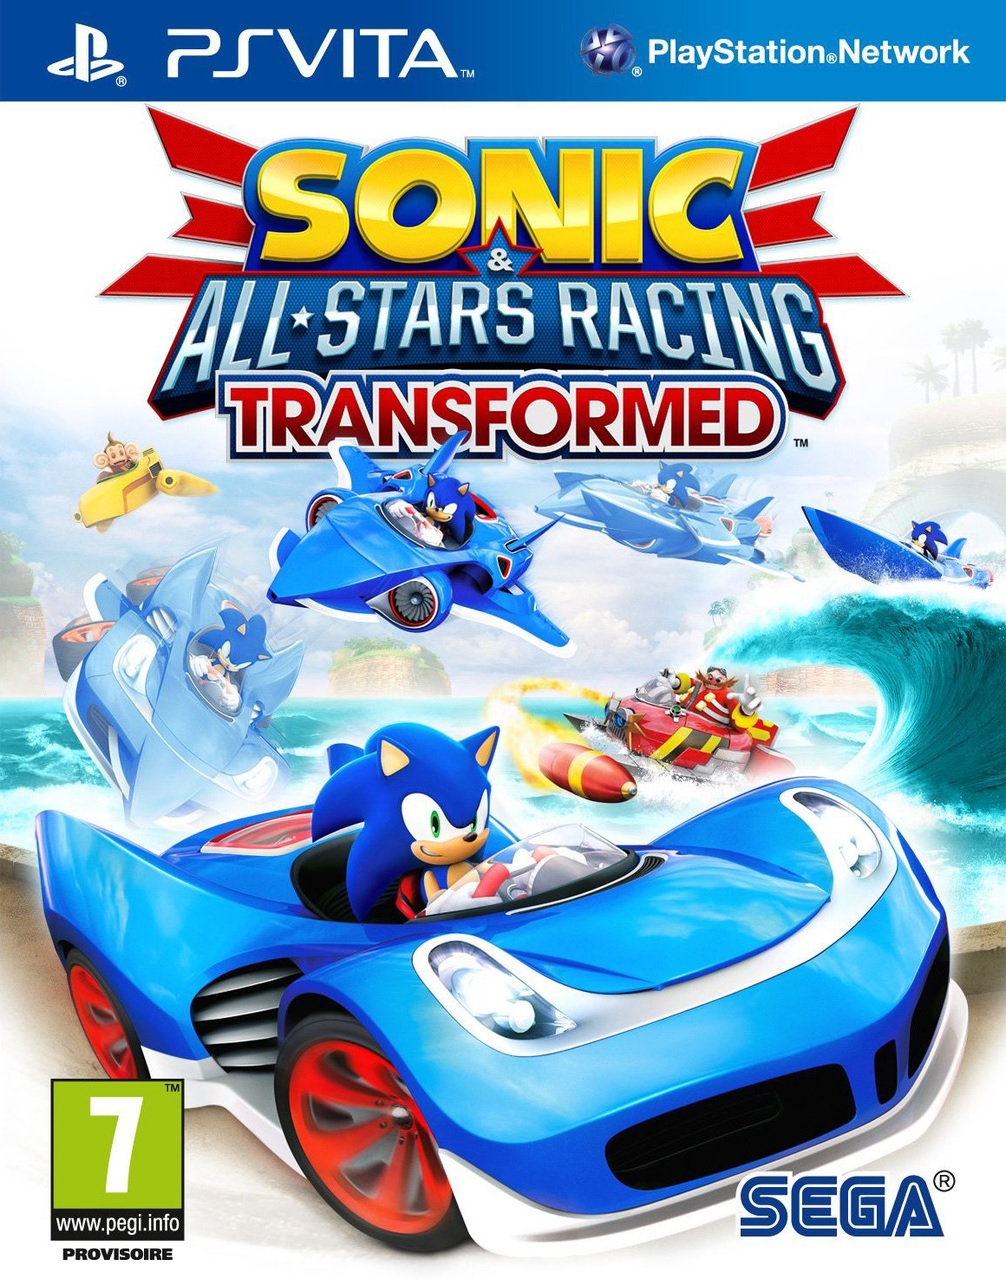 jaquette du jeu vidéo Sonic & All Stars Racing Transformed